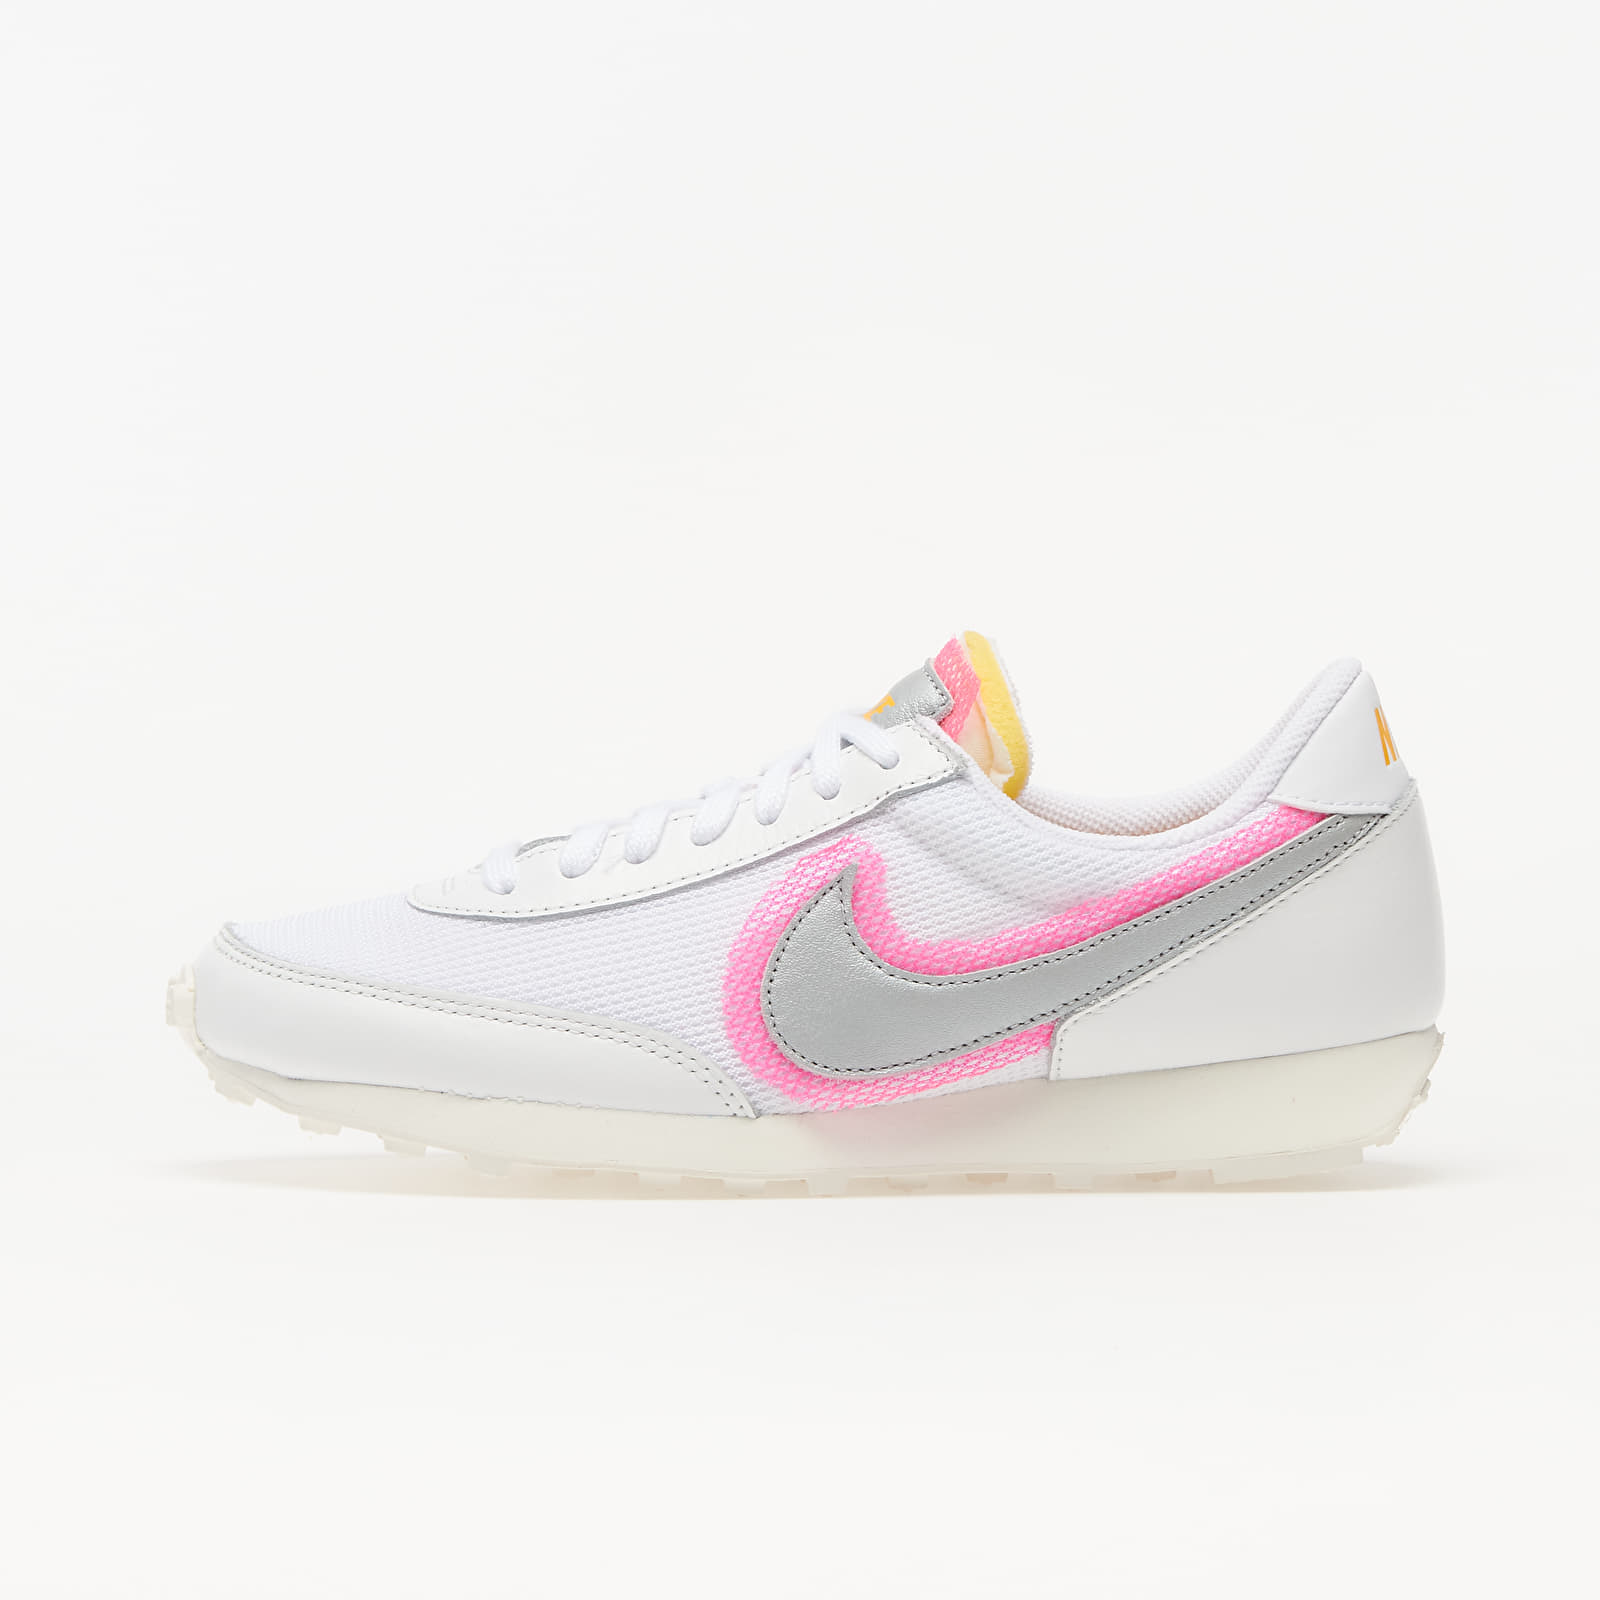 Women's shoes Nike Daybreak White/ Metallic Silver-Hyper Pink